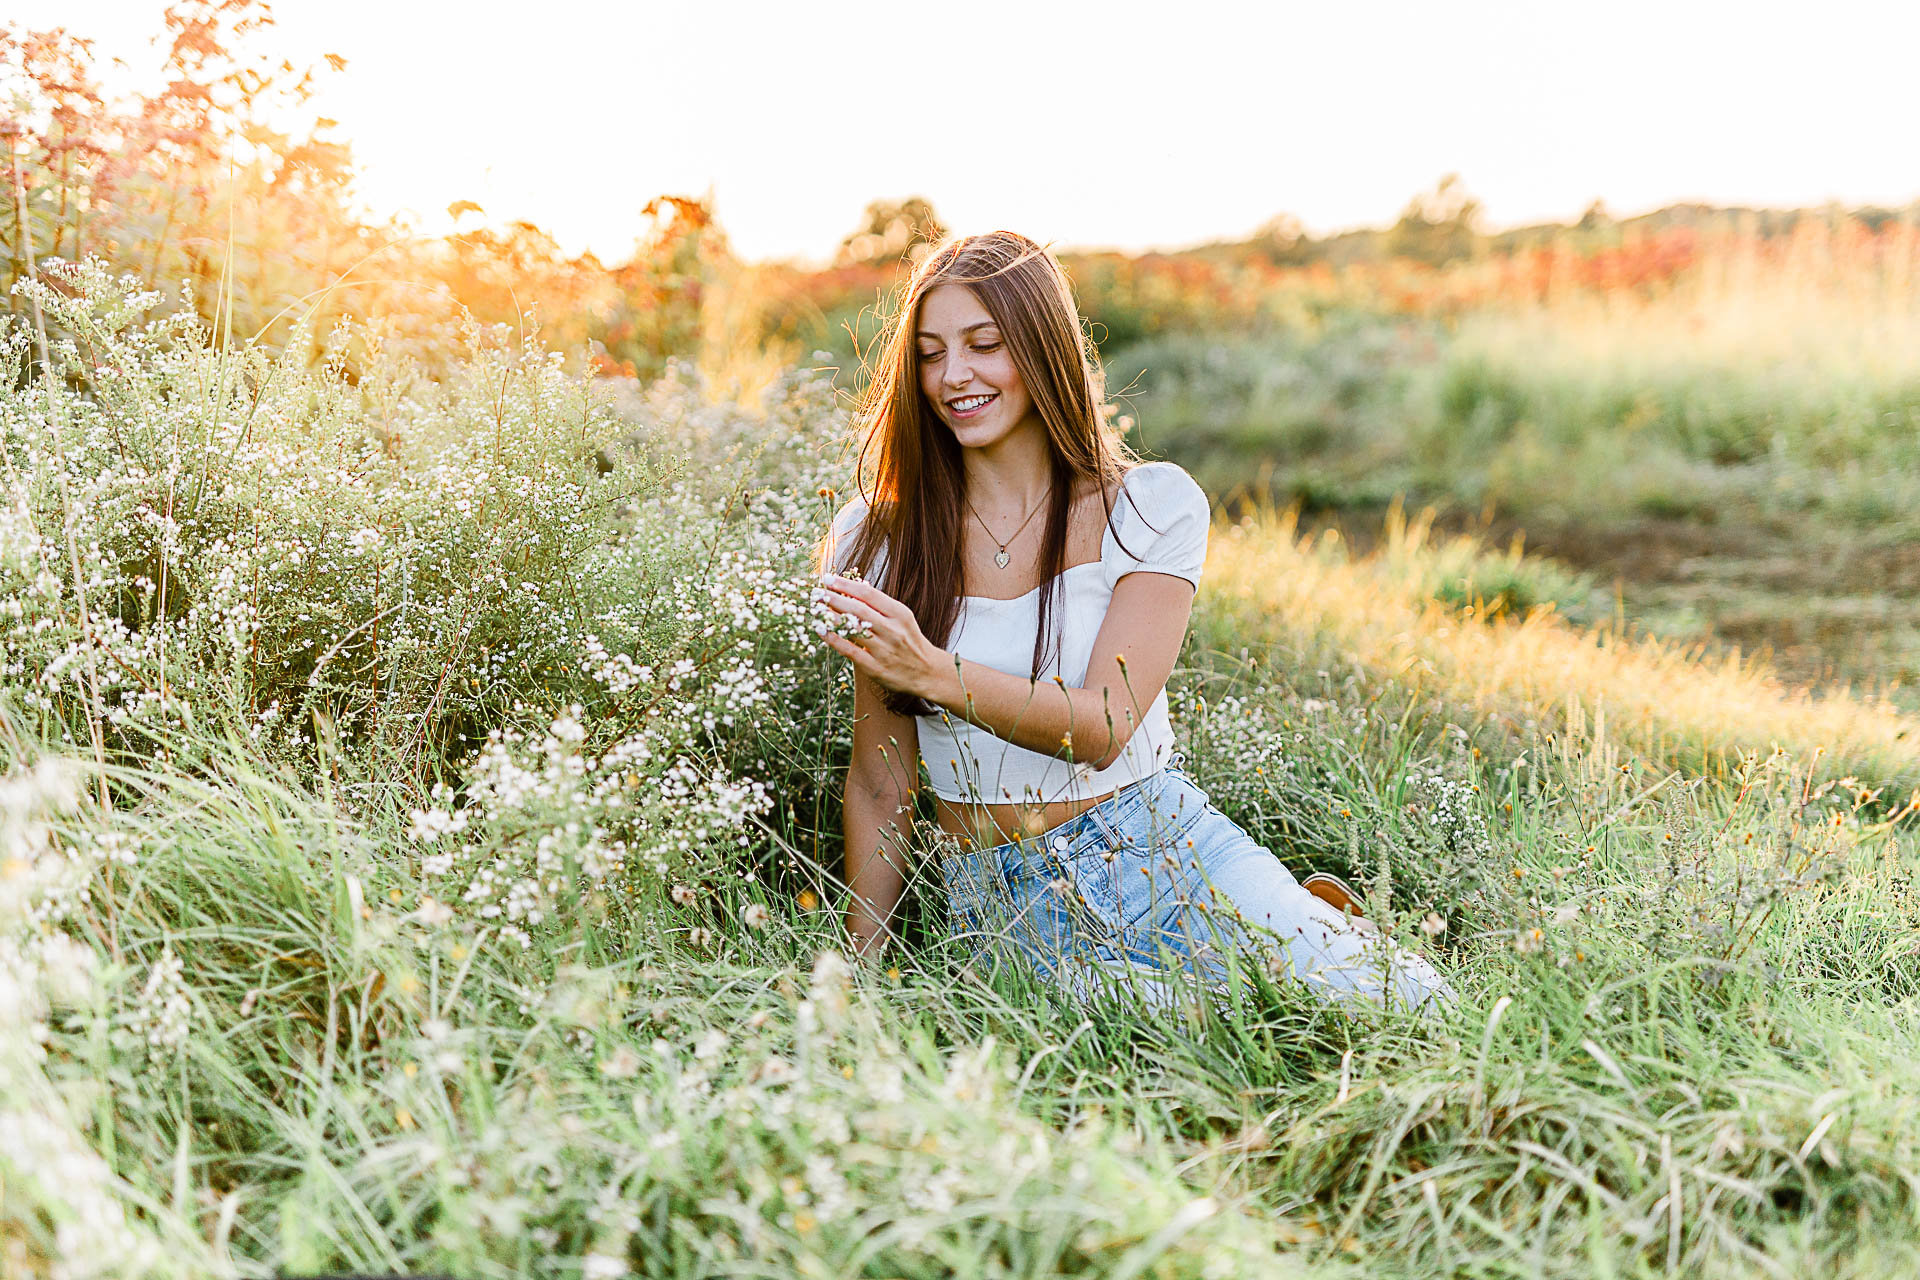 Girl in a wild flower field by Boston Senior Photographer Christina Runnals